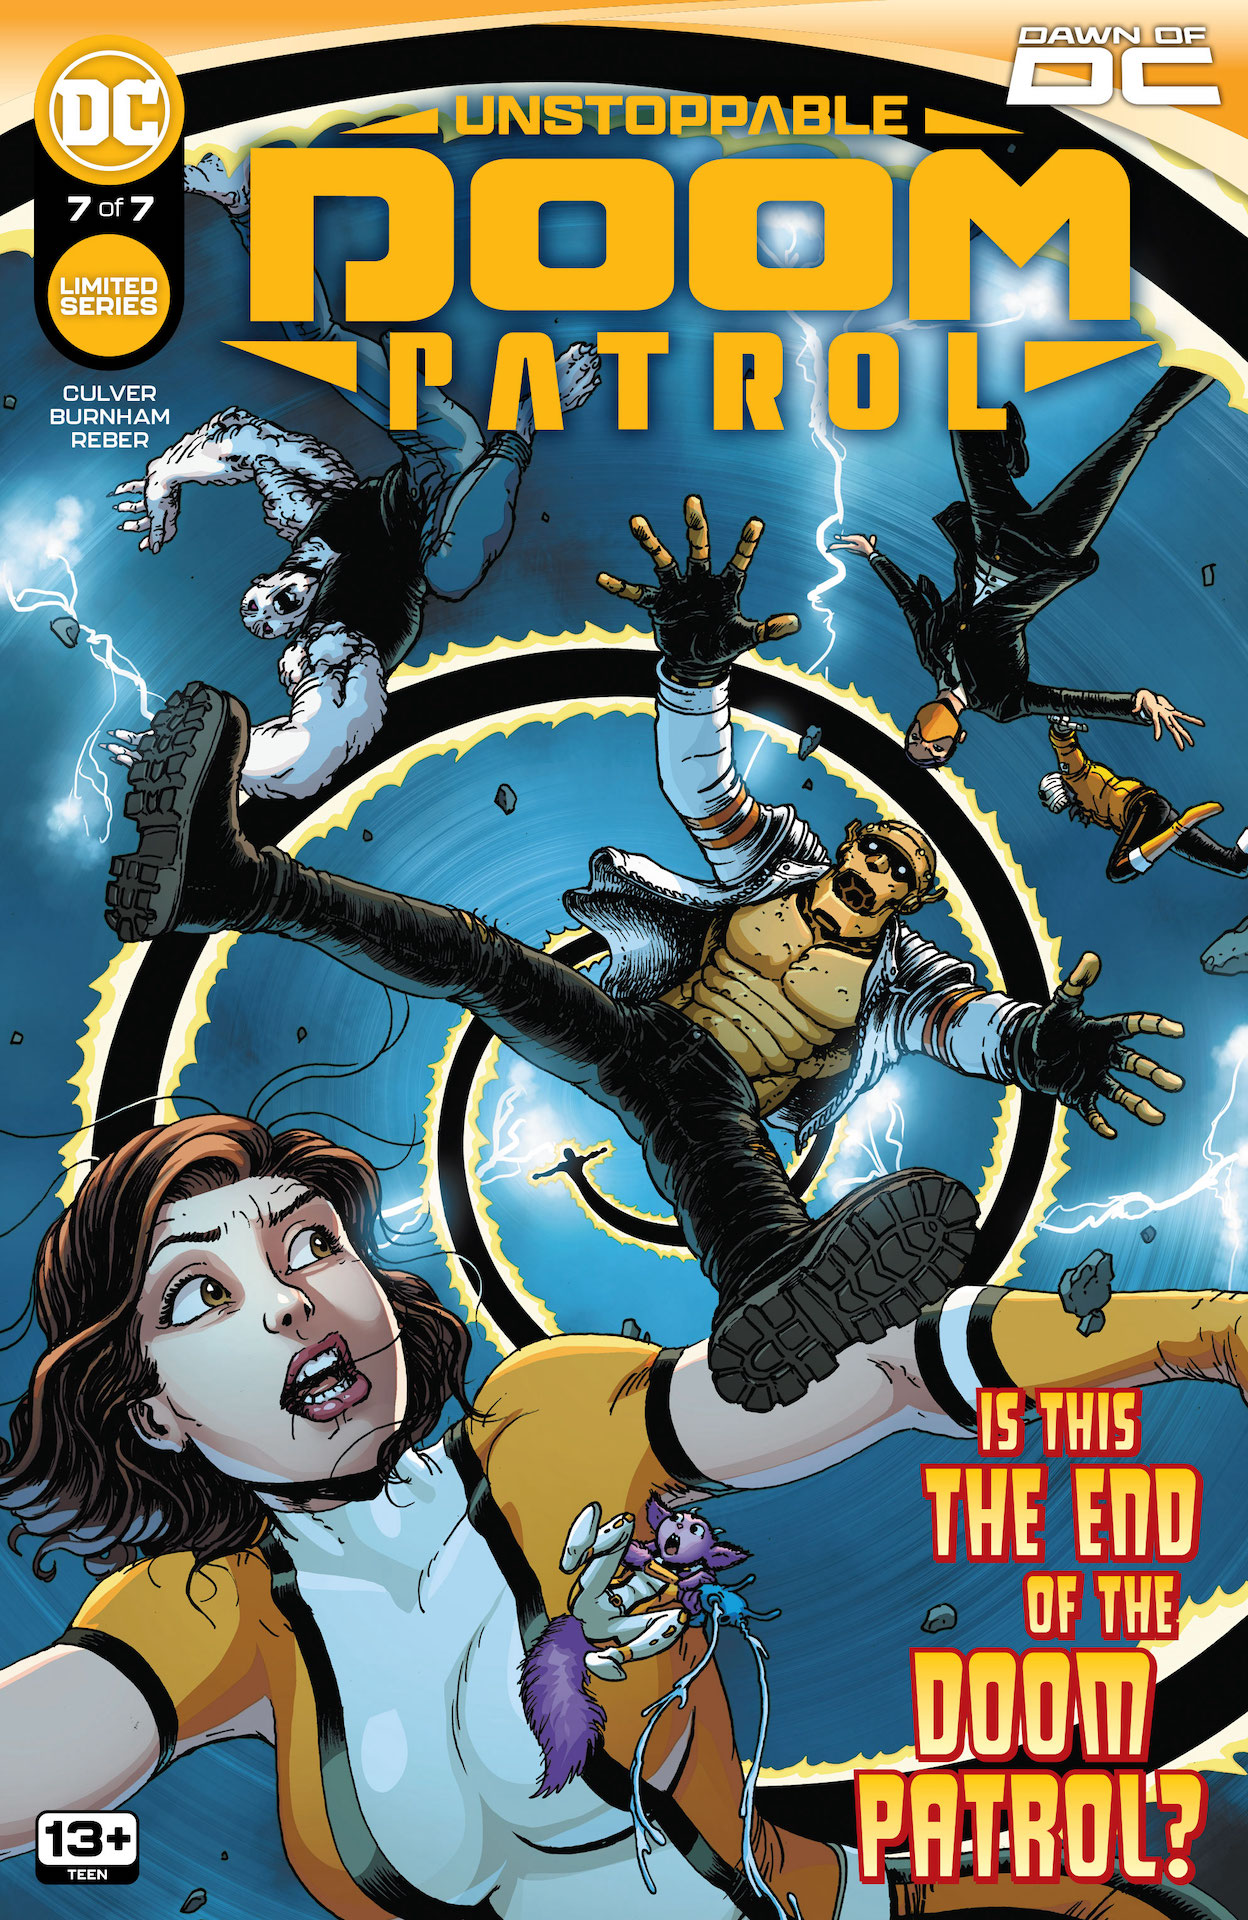 DC Preview: Unstoppable Doom Patrol #7